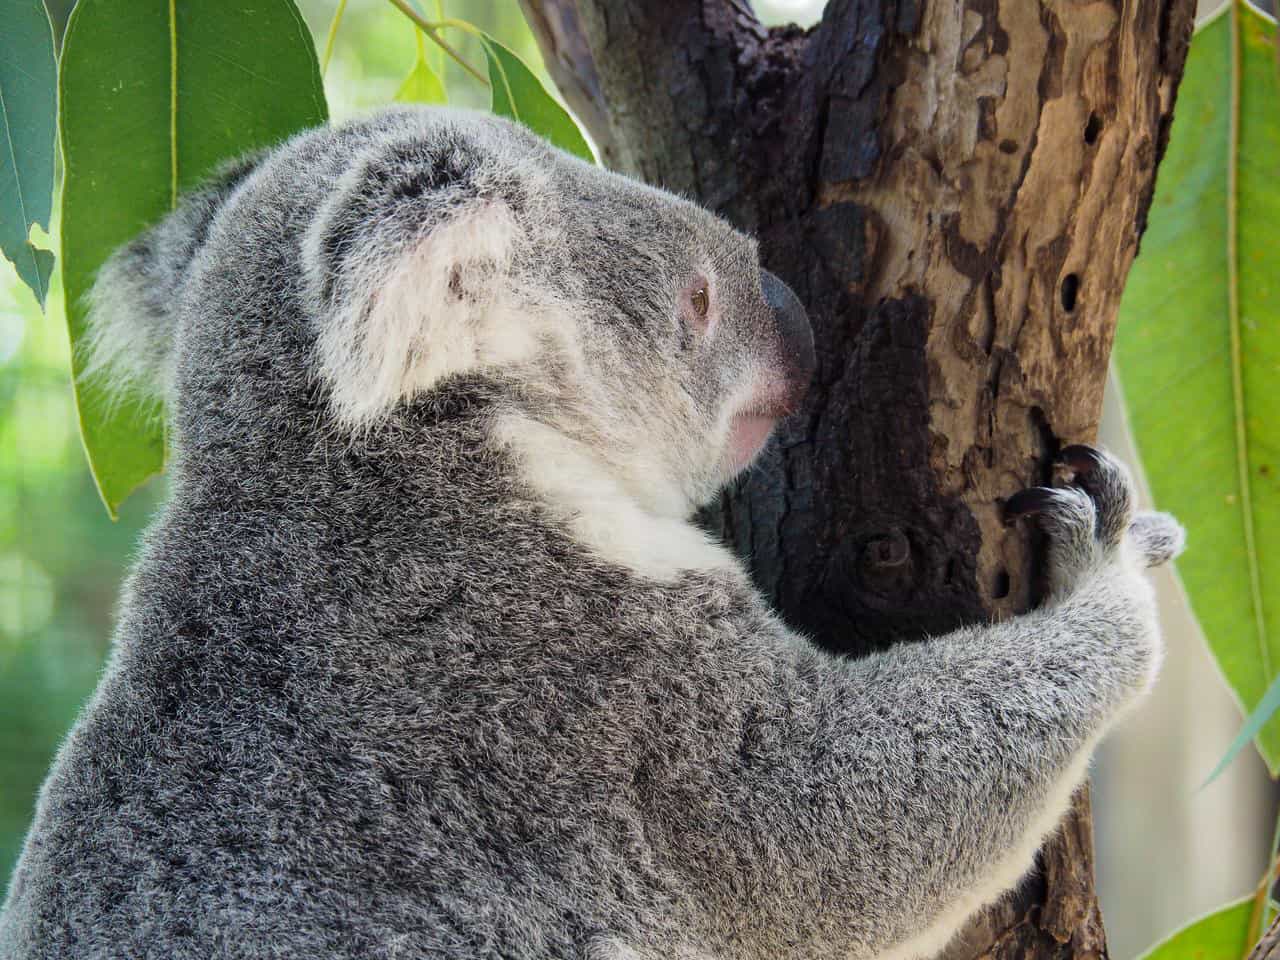 A koala at the Wildlife Habitat in Port Douglas, Australia // Travel Mermaid